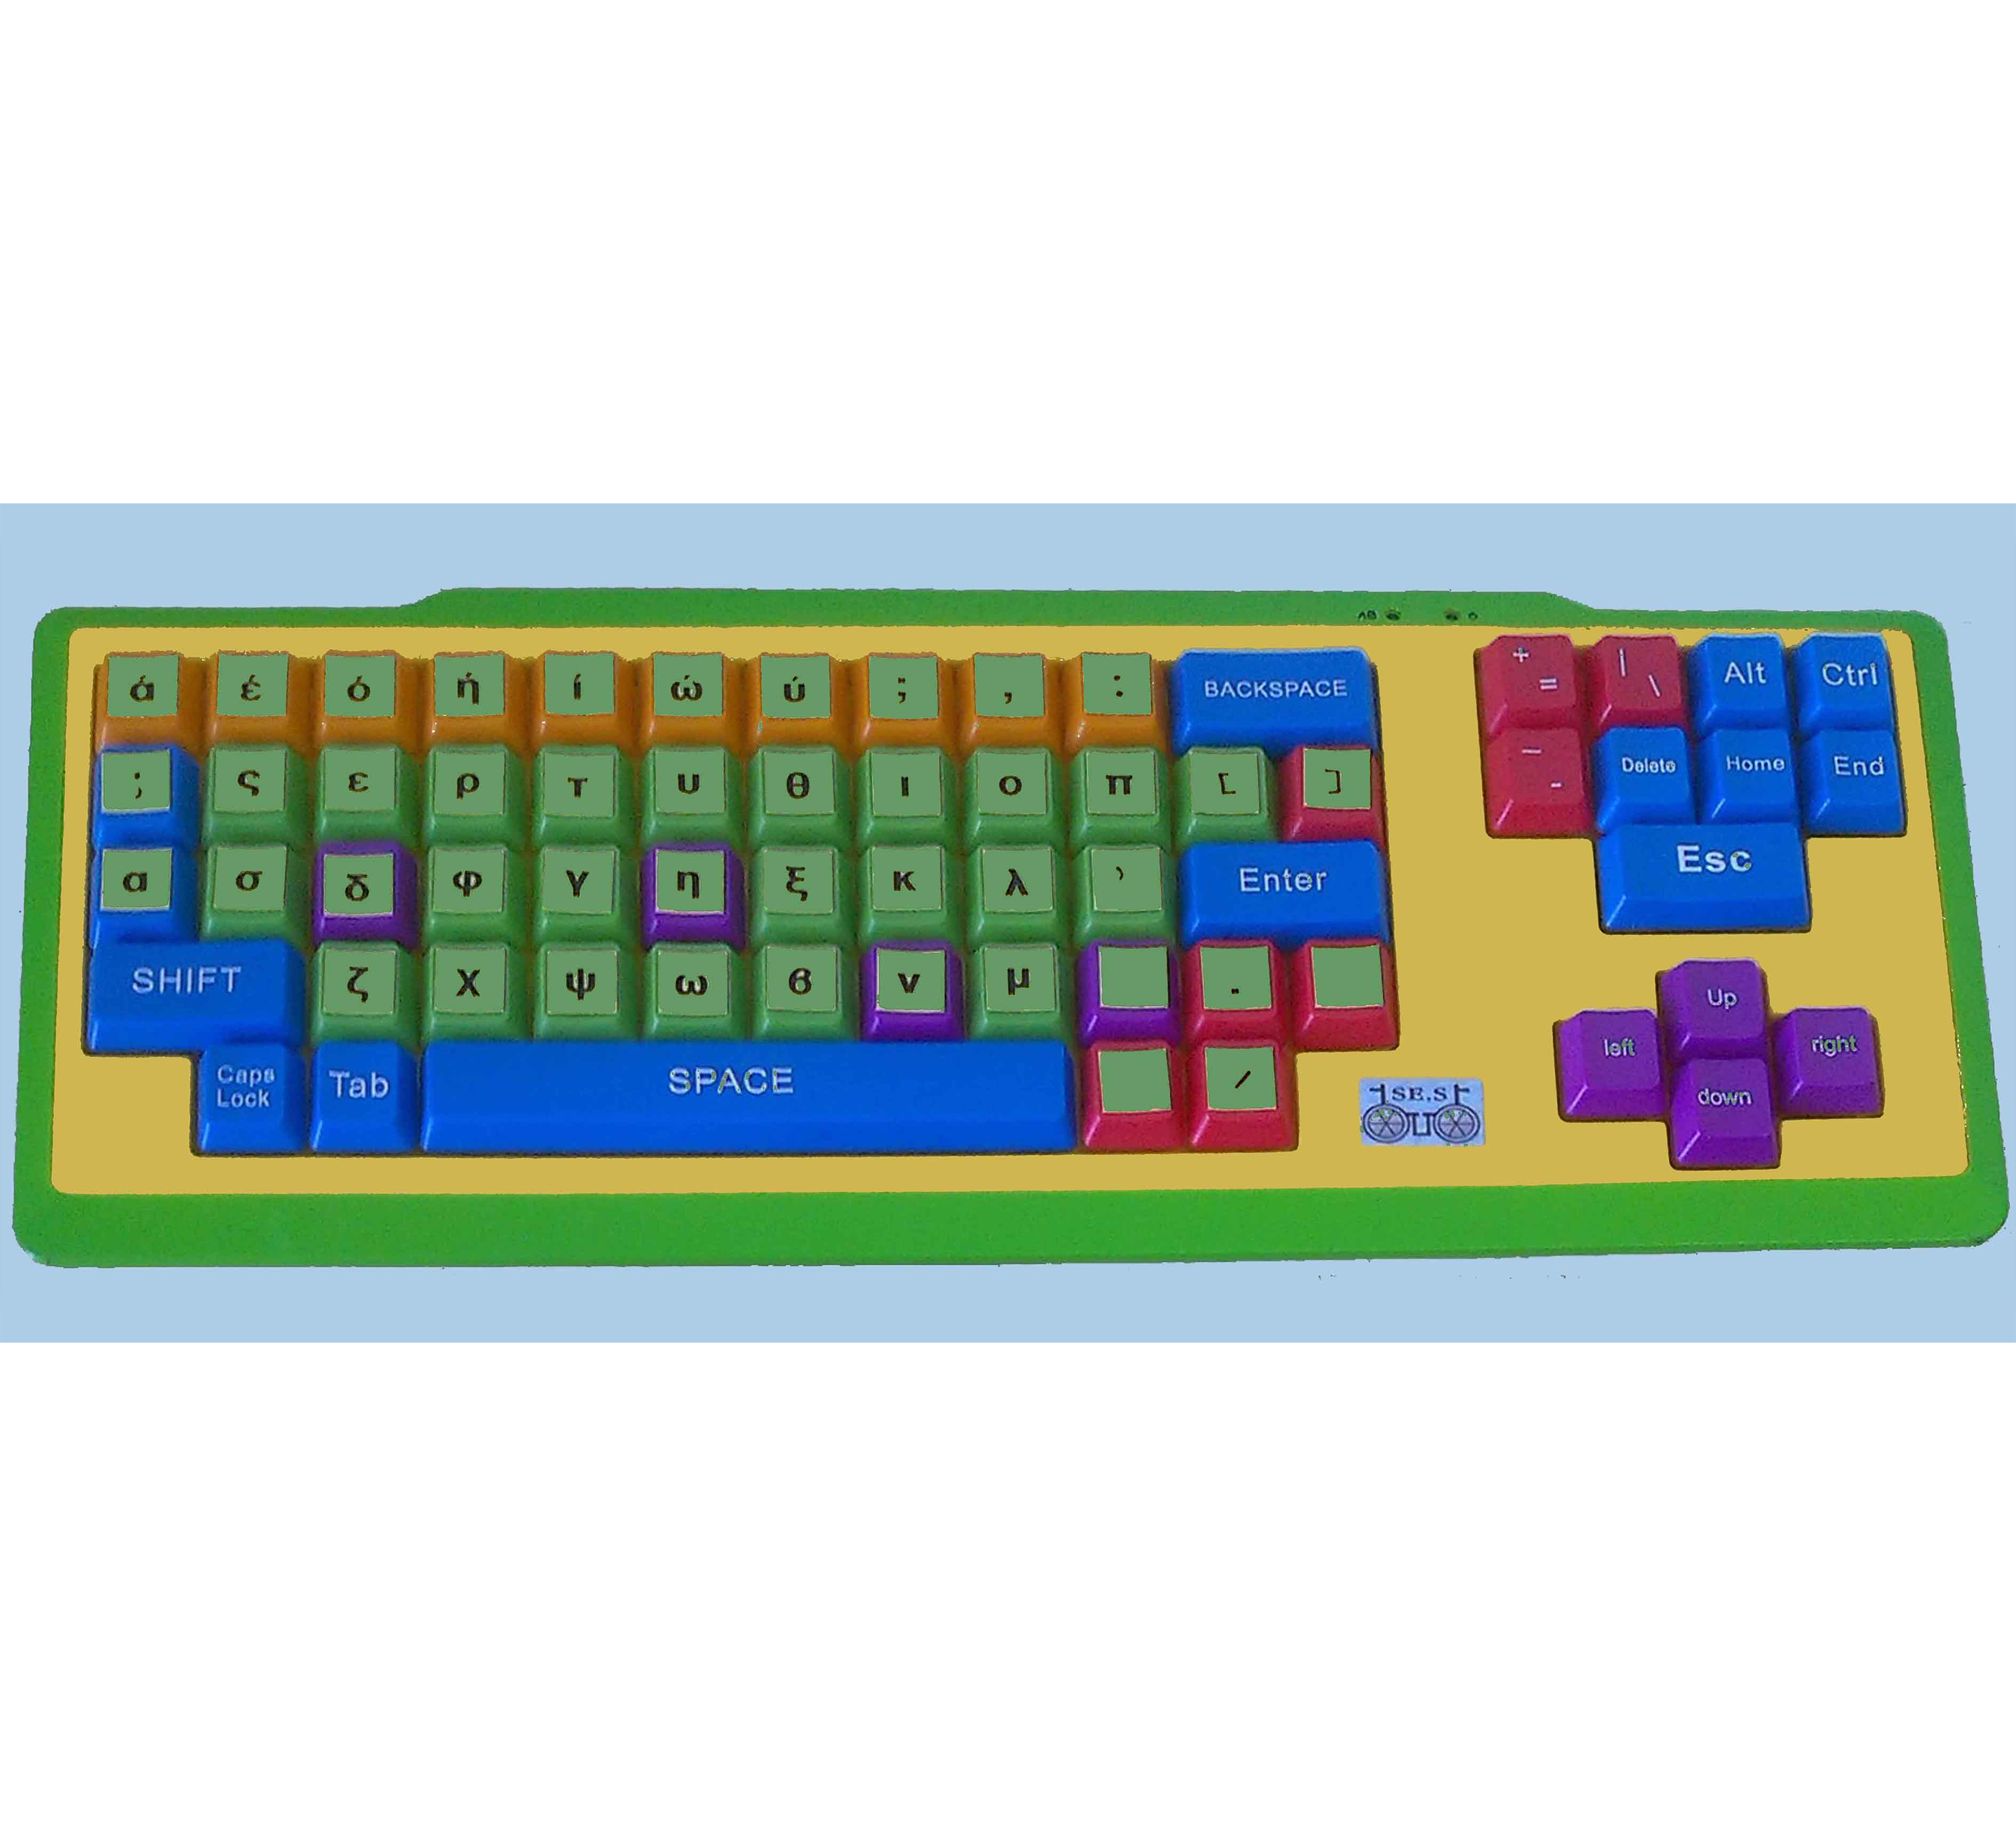 Large Keys keyboard